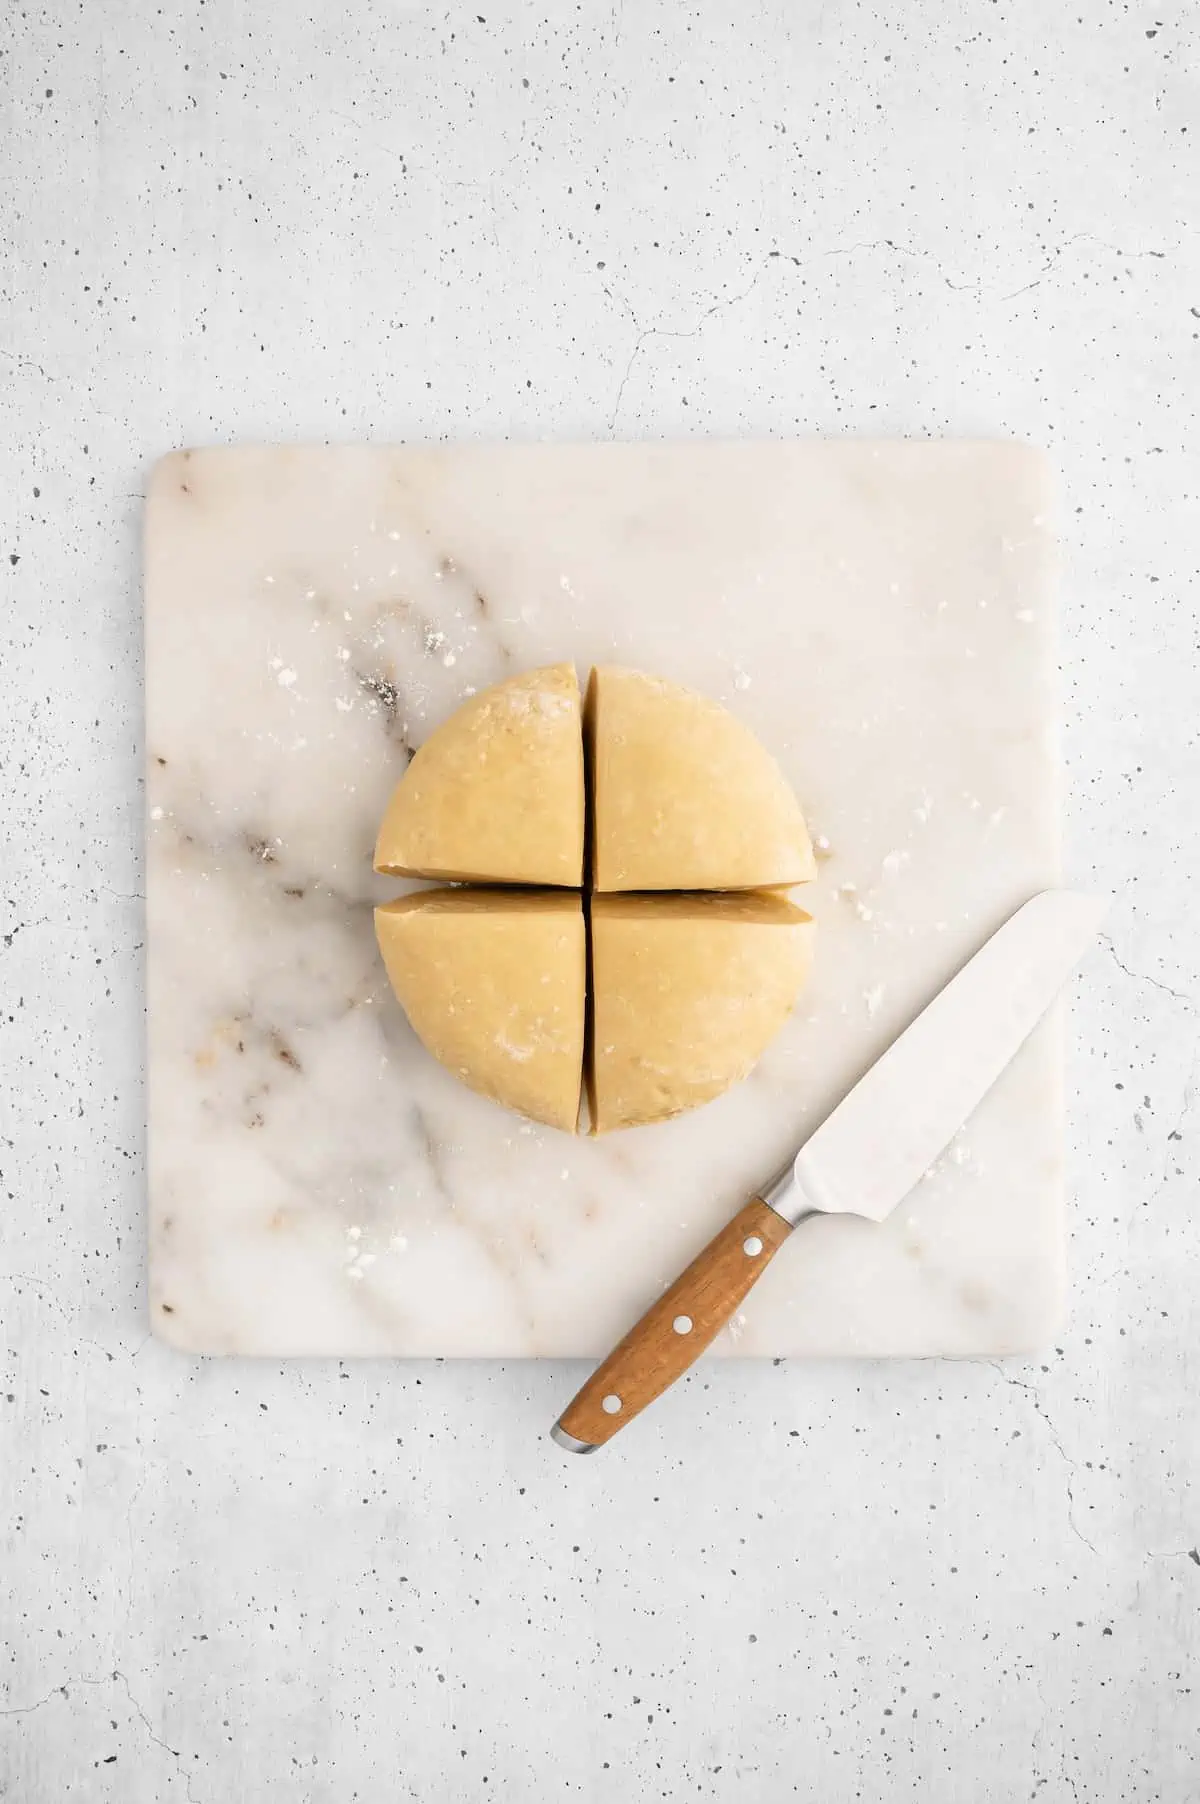 Vegan ravioli dough, cut into quarters.